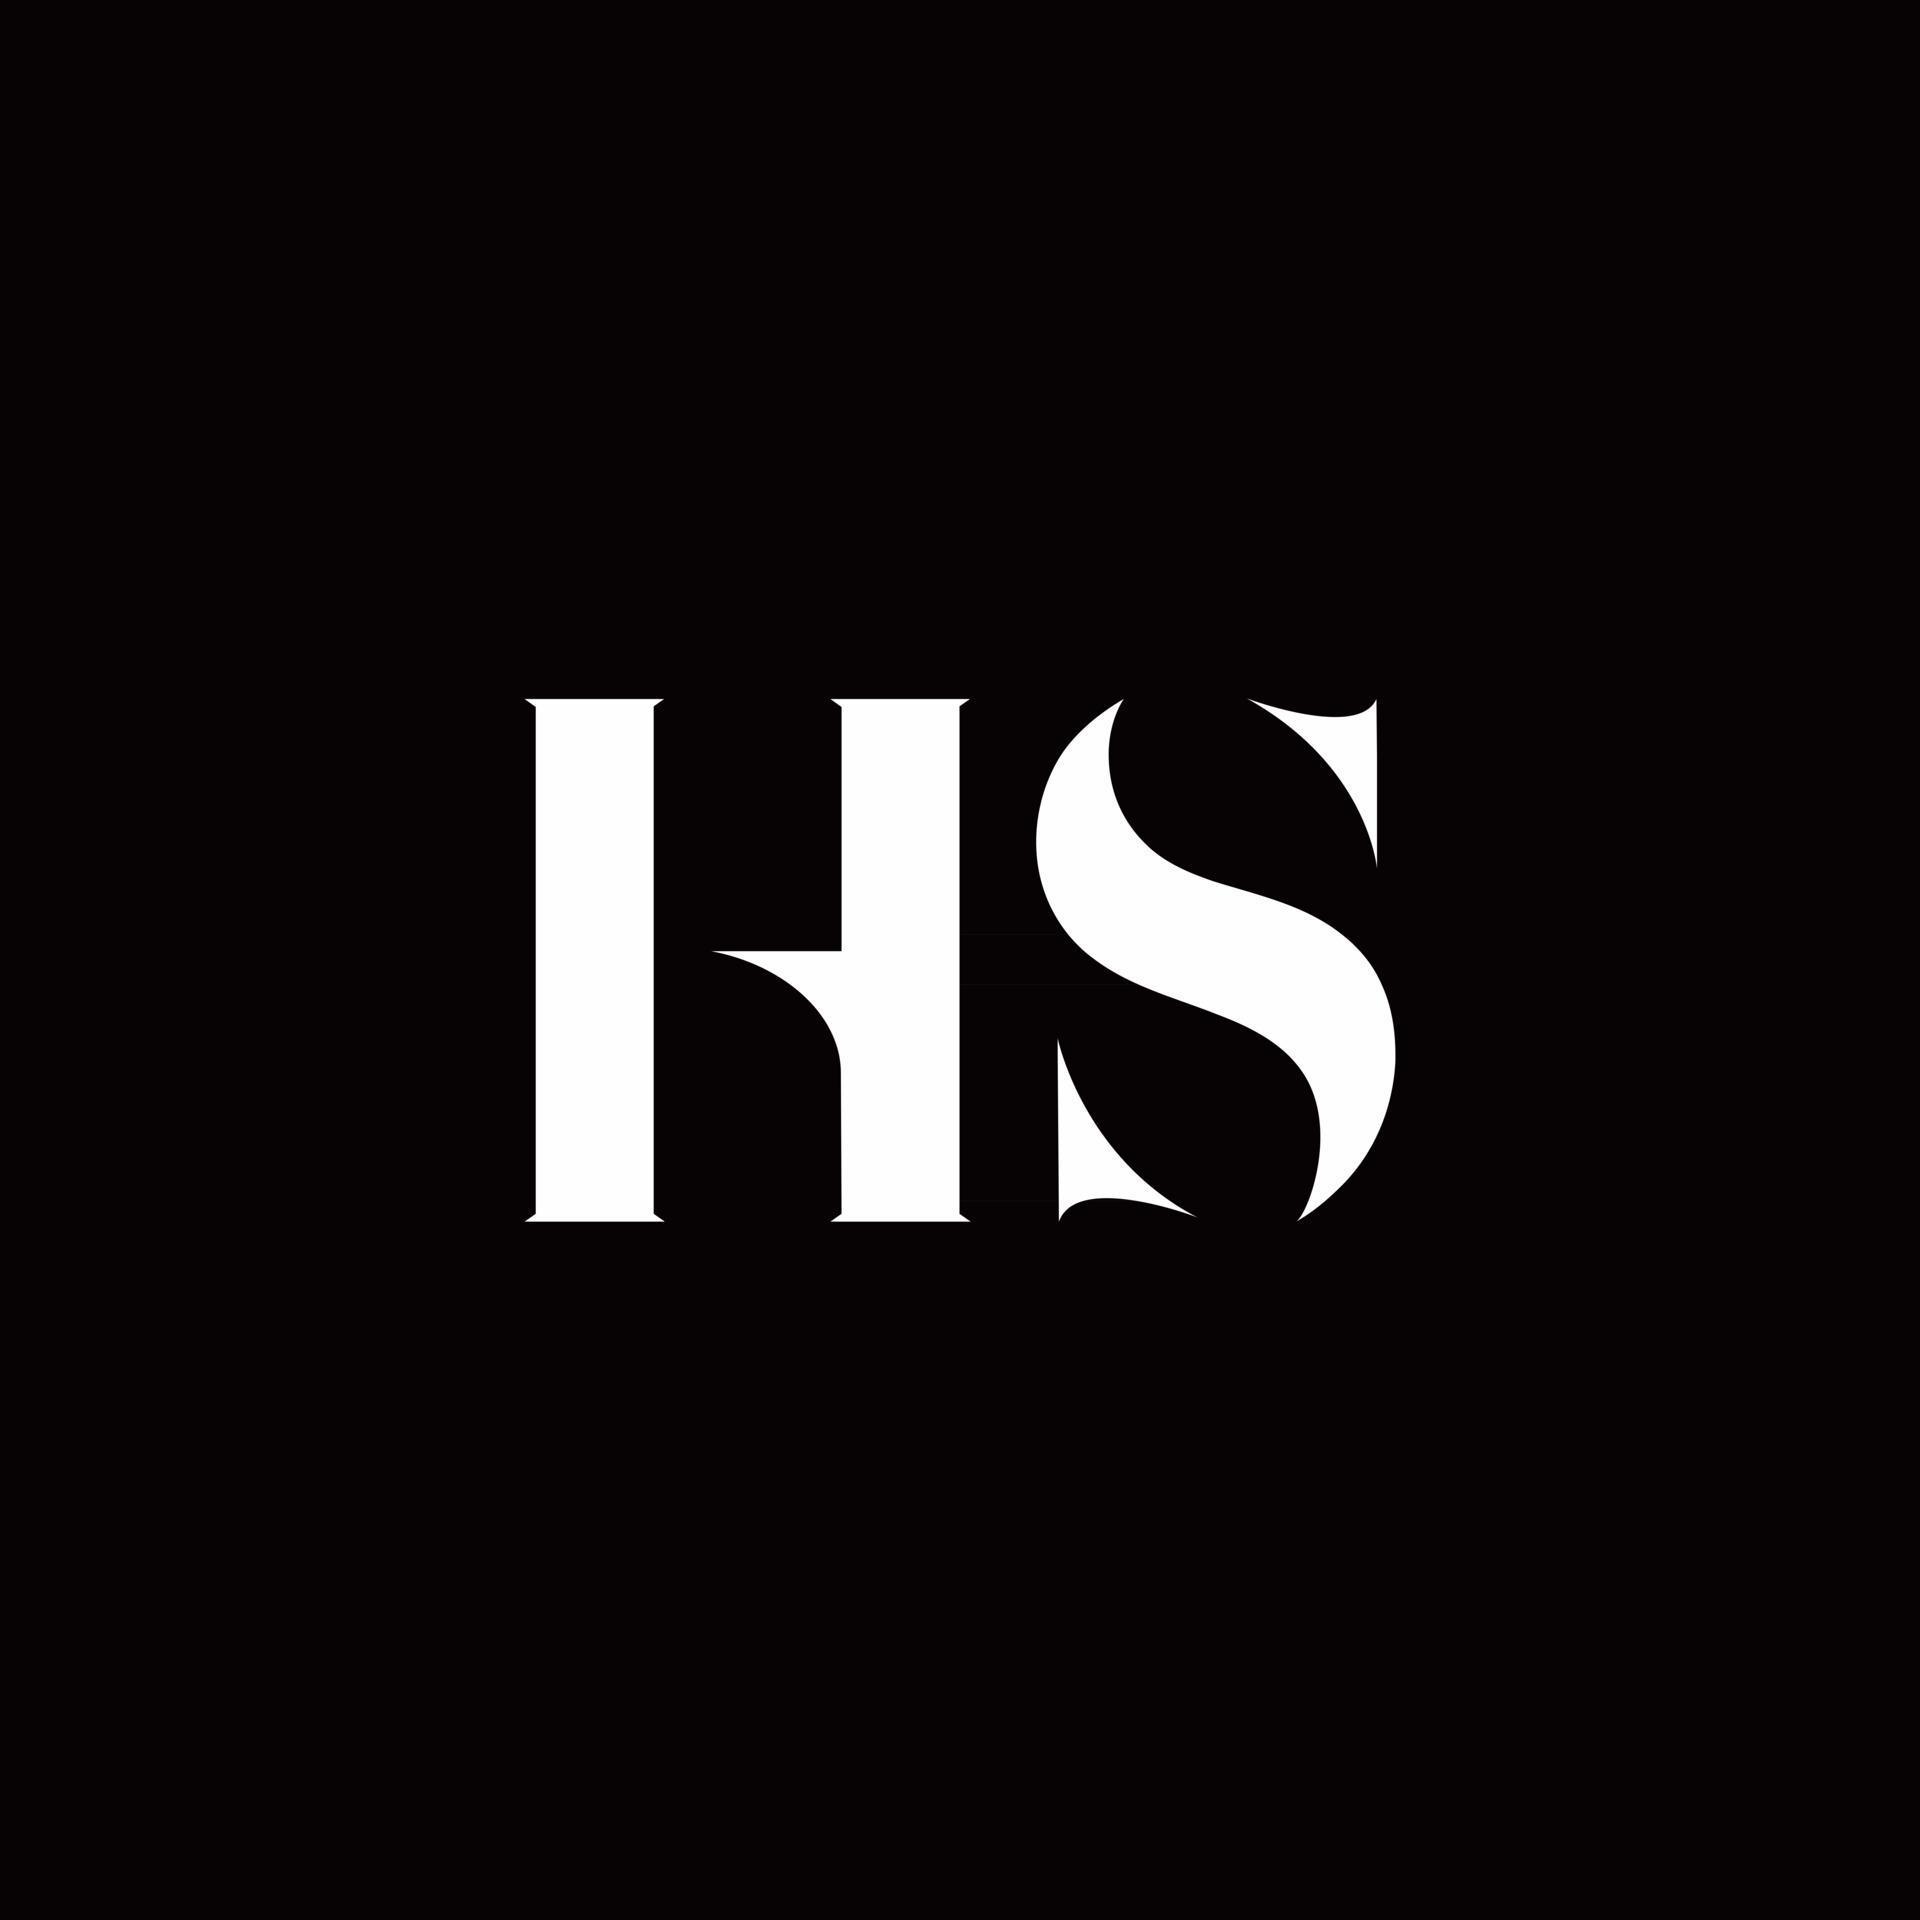 hs-logo-letter-initial-logo-designs-template-2767757-vector-art-at-vecteezy